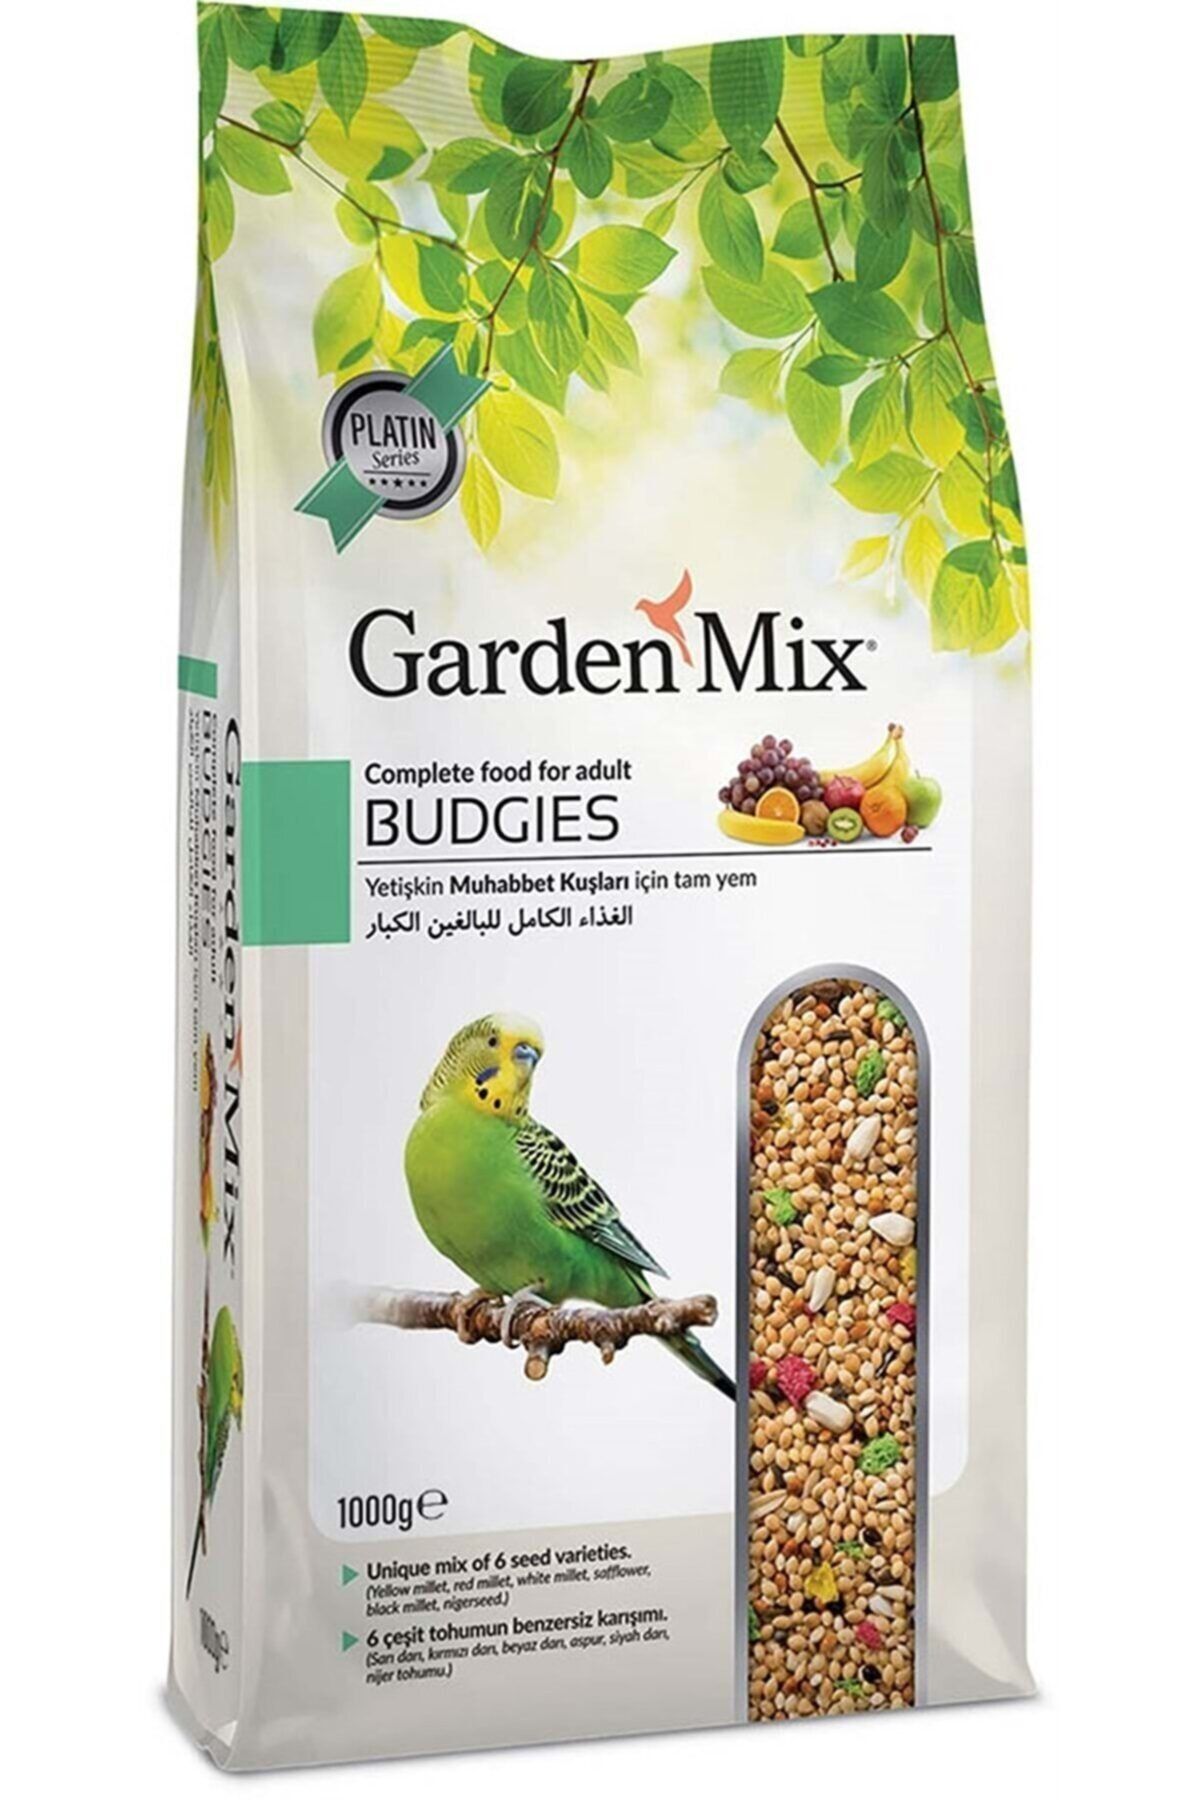 Gardenmix Garden Mix Platin Meyveli Muhabbet Kuşu Yemi 1kg